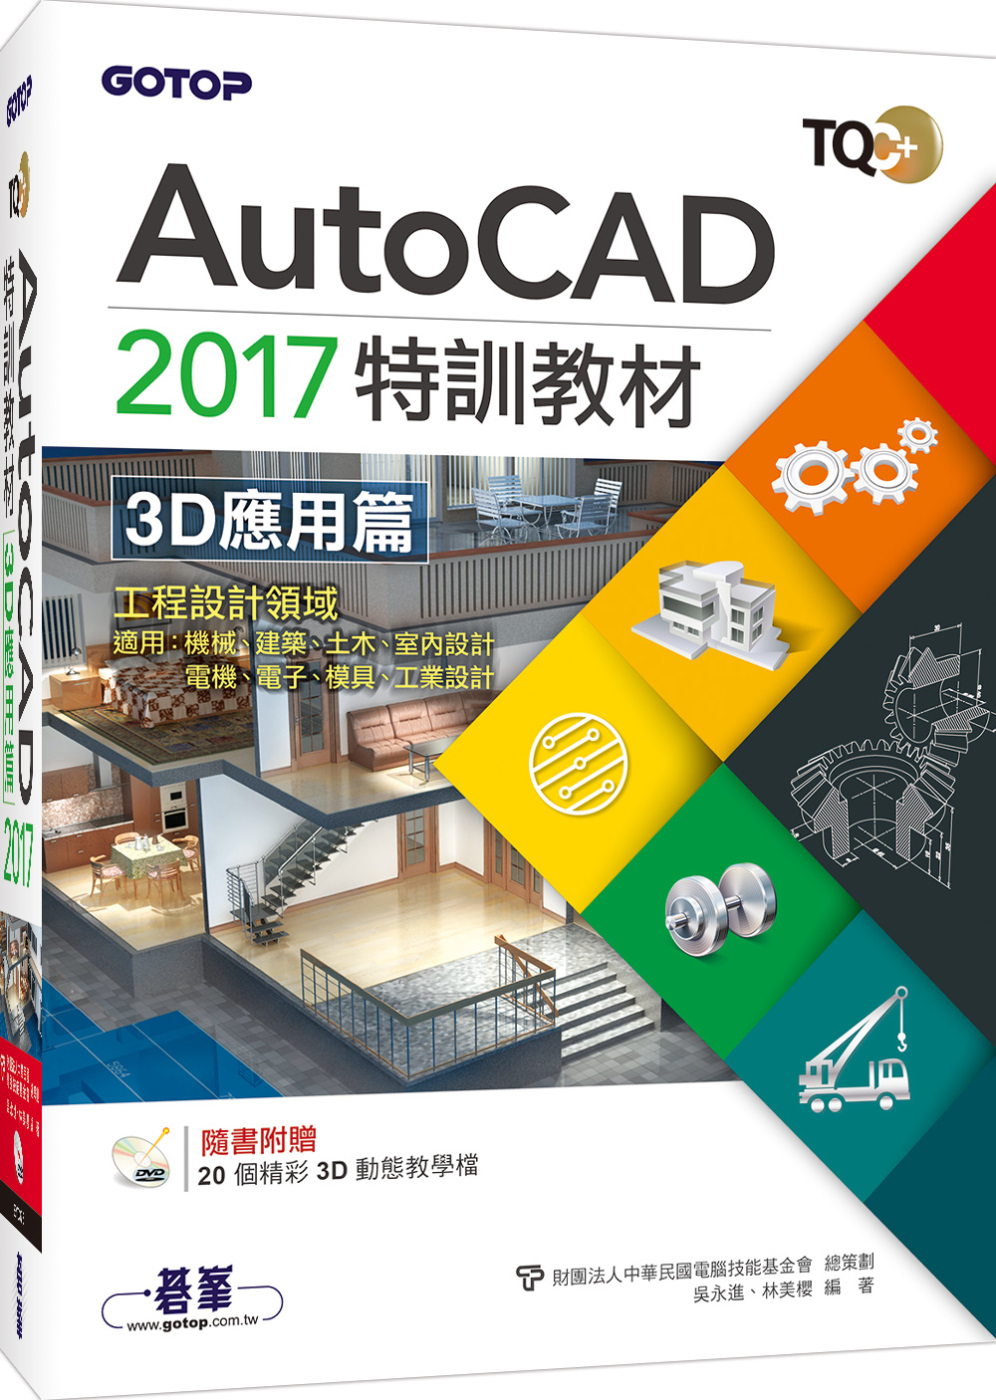 TQC+ AutoCAD 2017特訓教材-3D應用篇(附贈20個精彩3D動態教學檔)